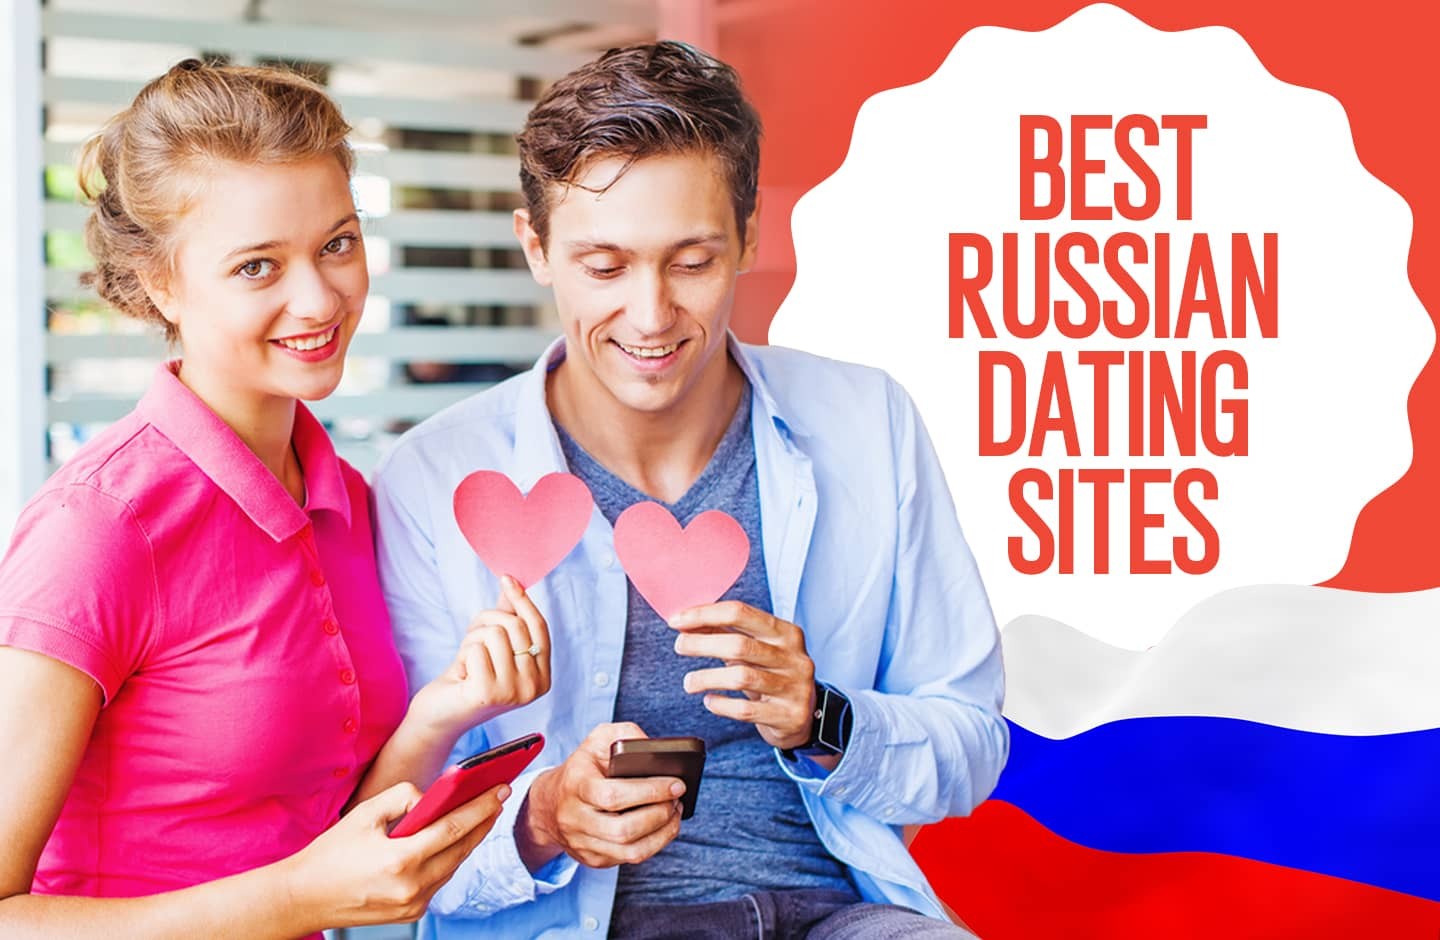 Sites russian in Santos dating 7 Best